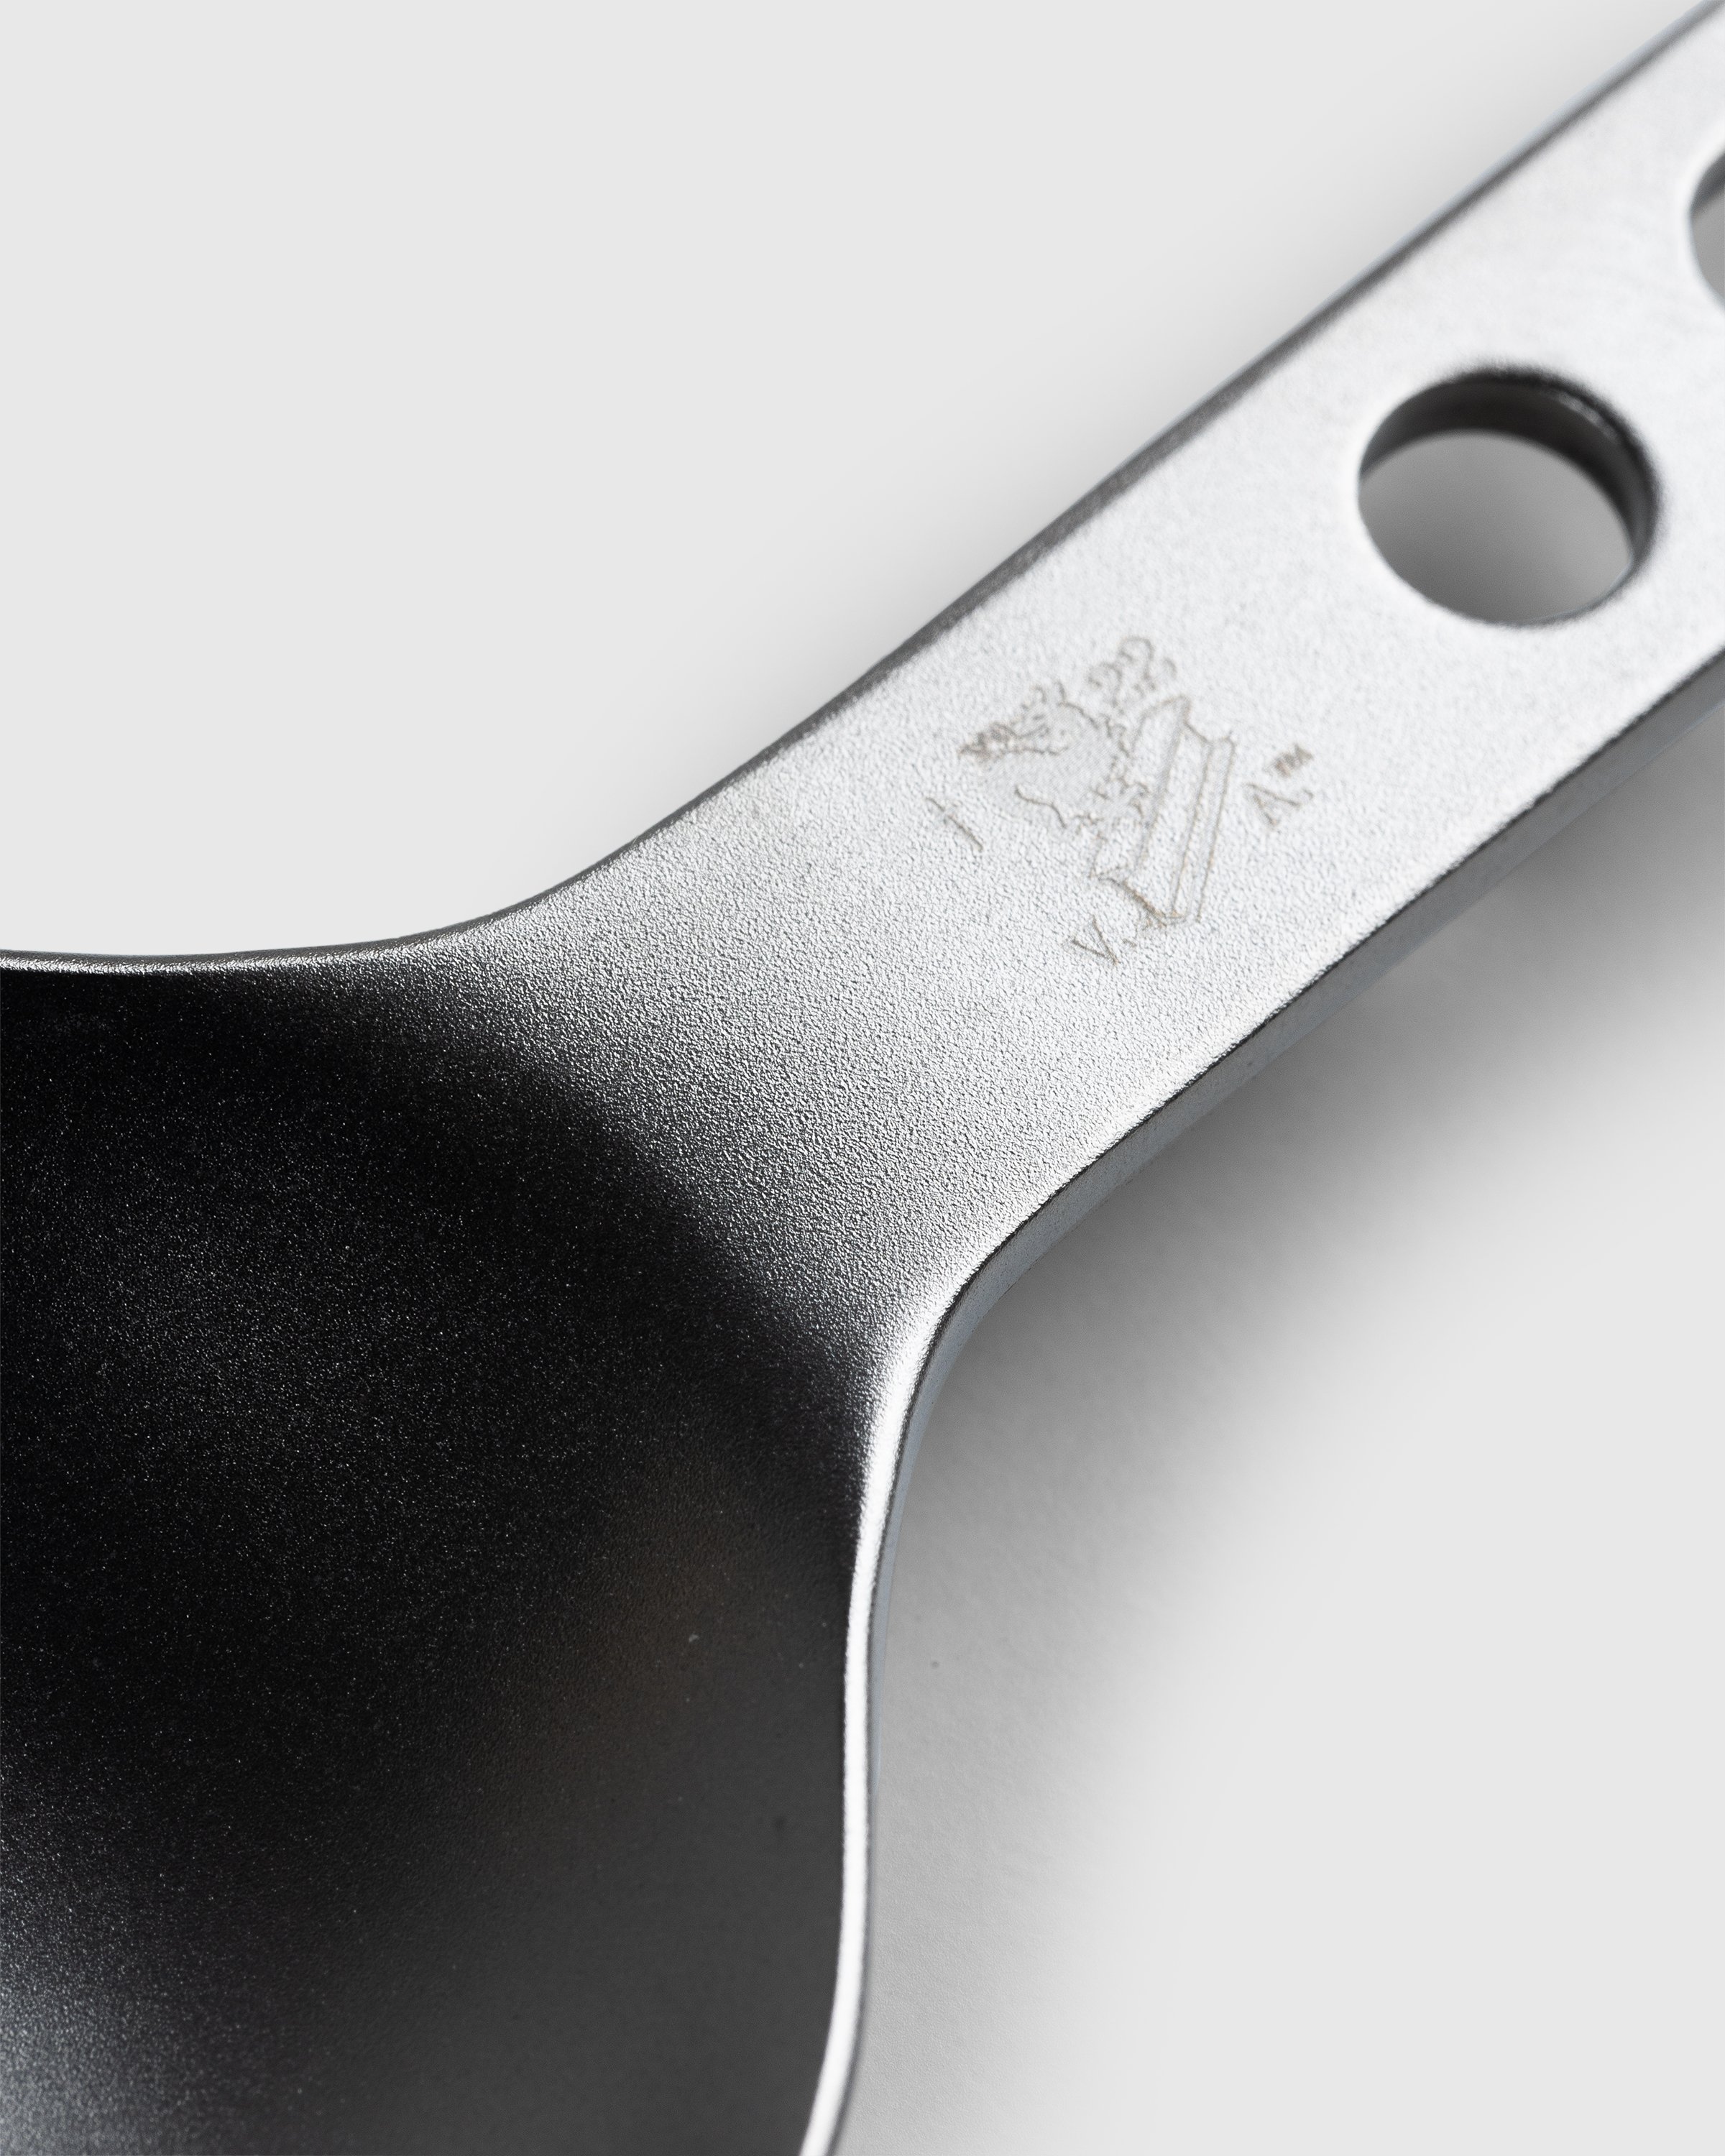 ALESSI x VIRGIL ABLOH - VA01 Cutlery Set - Lifestyle - Silver - Image 6